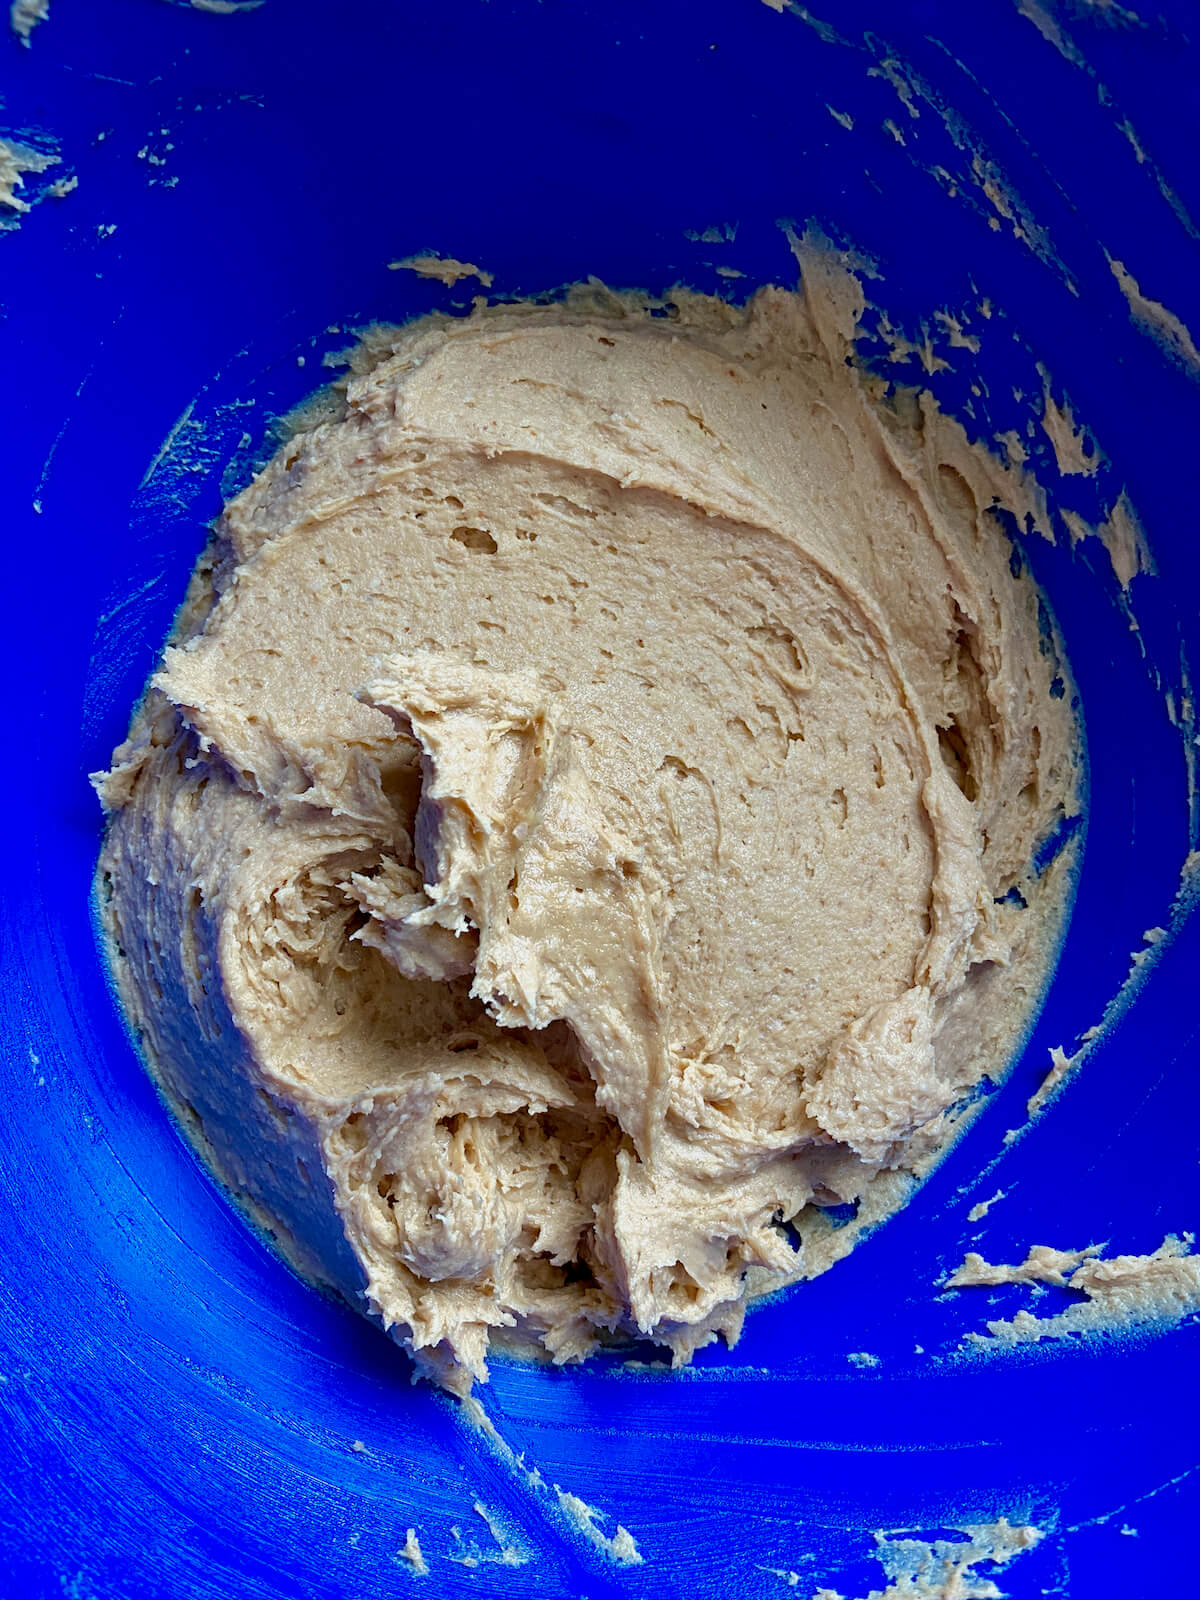 The sourdough peanut butter cookie dough in a blue mixing bowl.